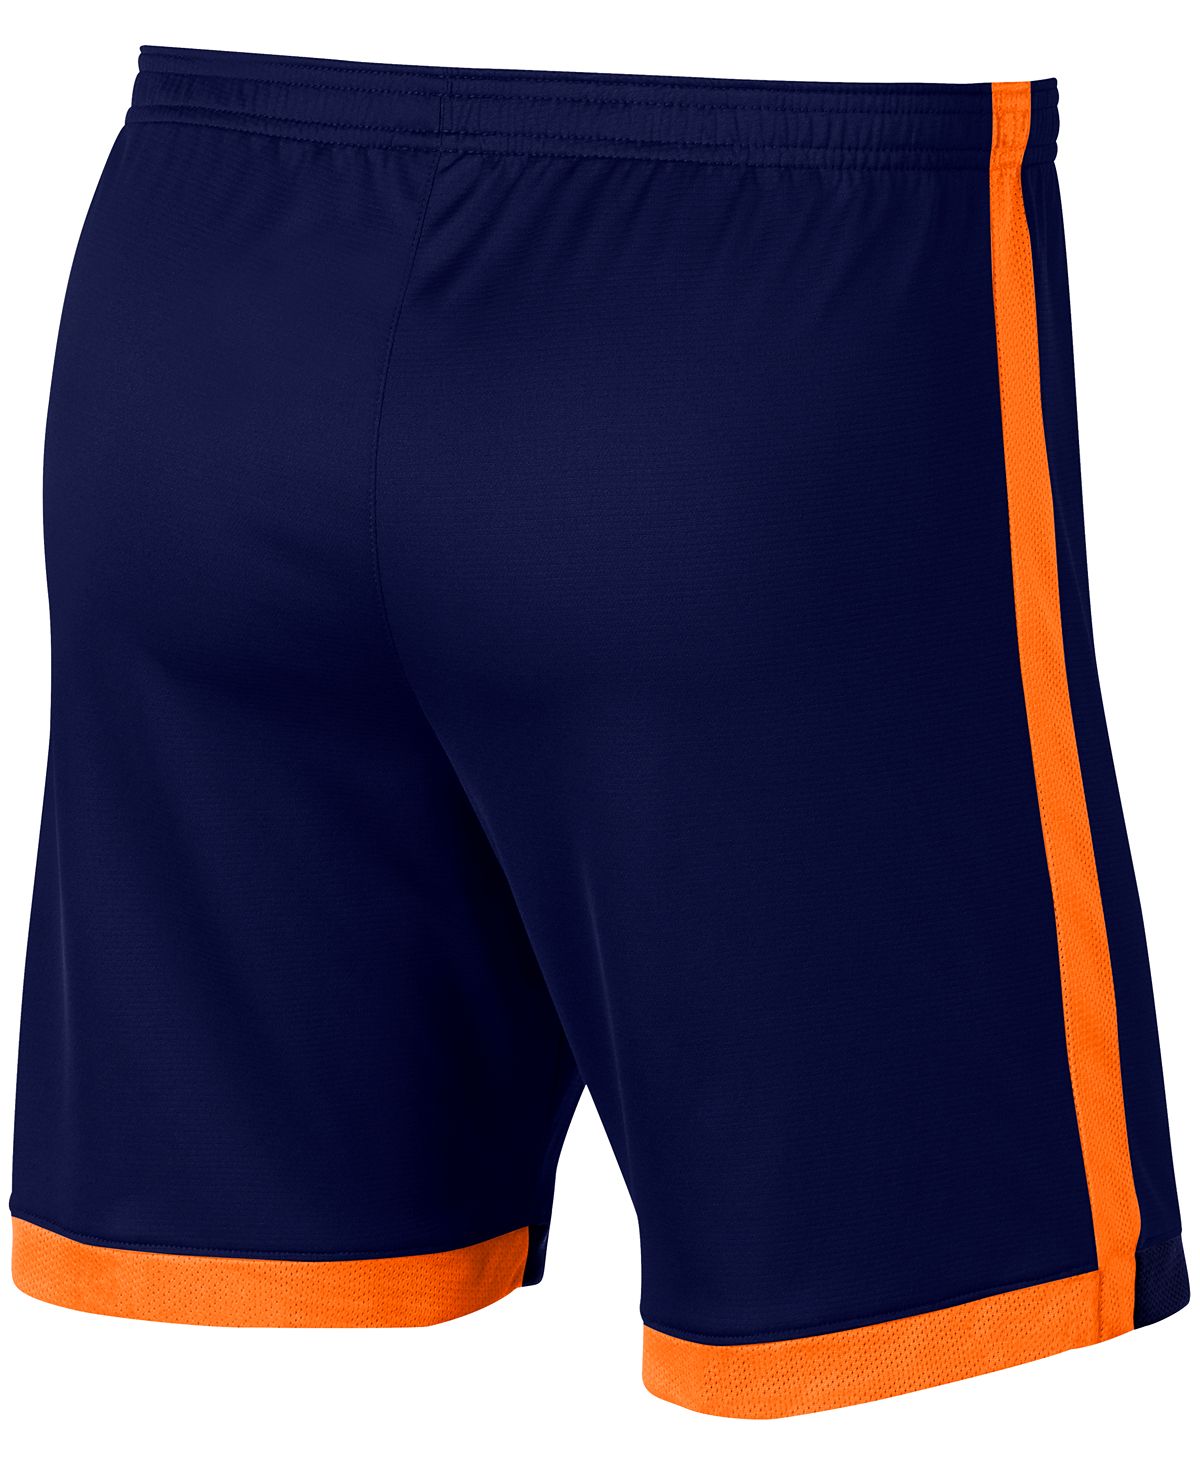 Nike Dri-fit Academy Soccer Shorts Blue/Orange